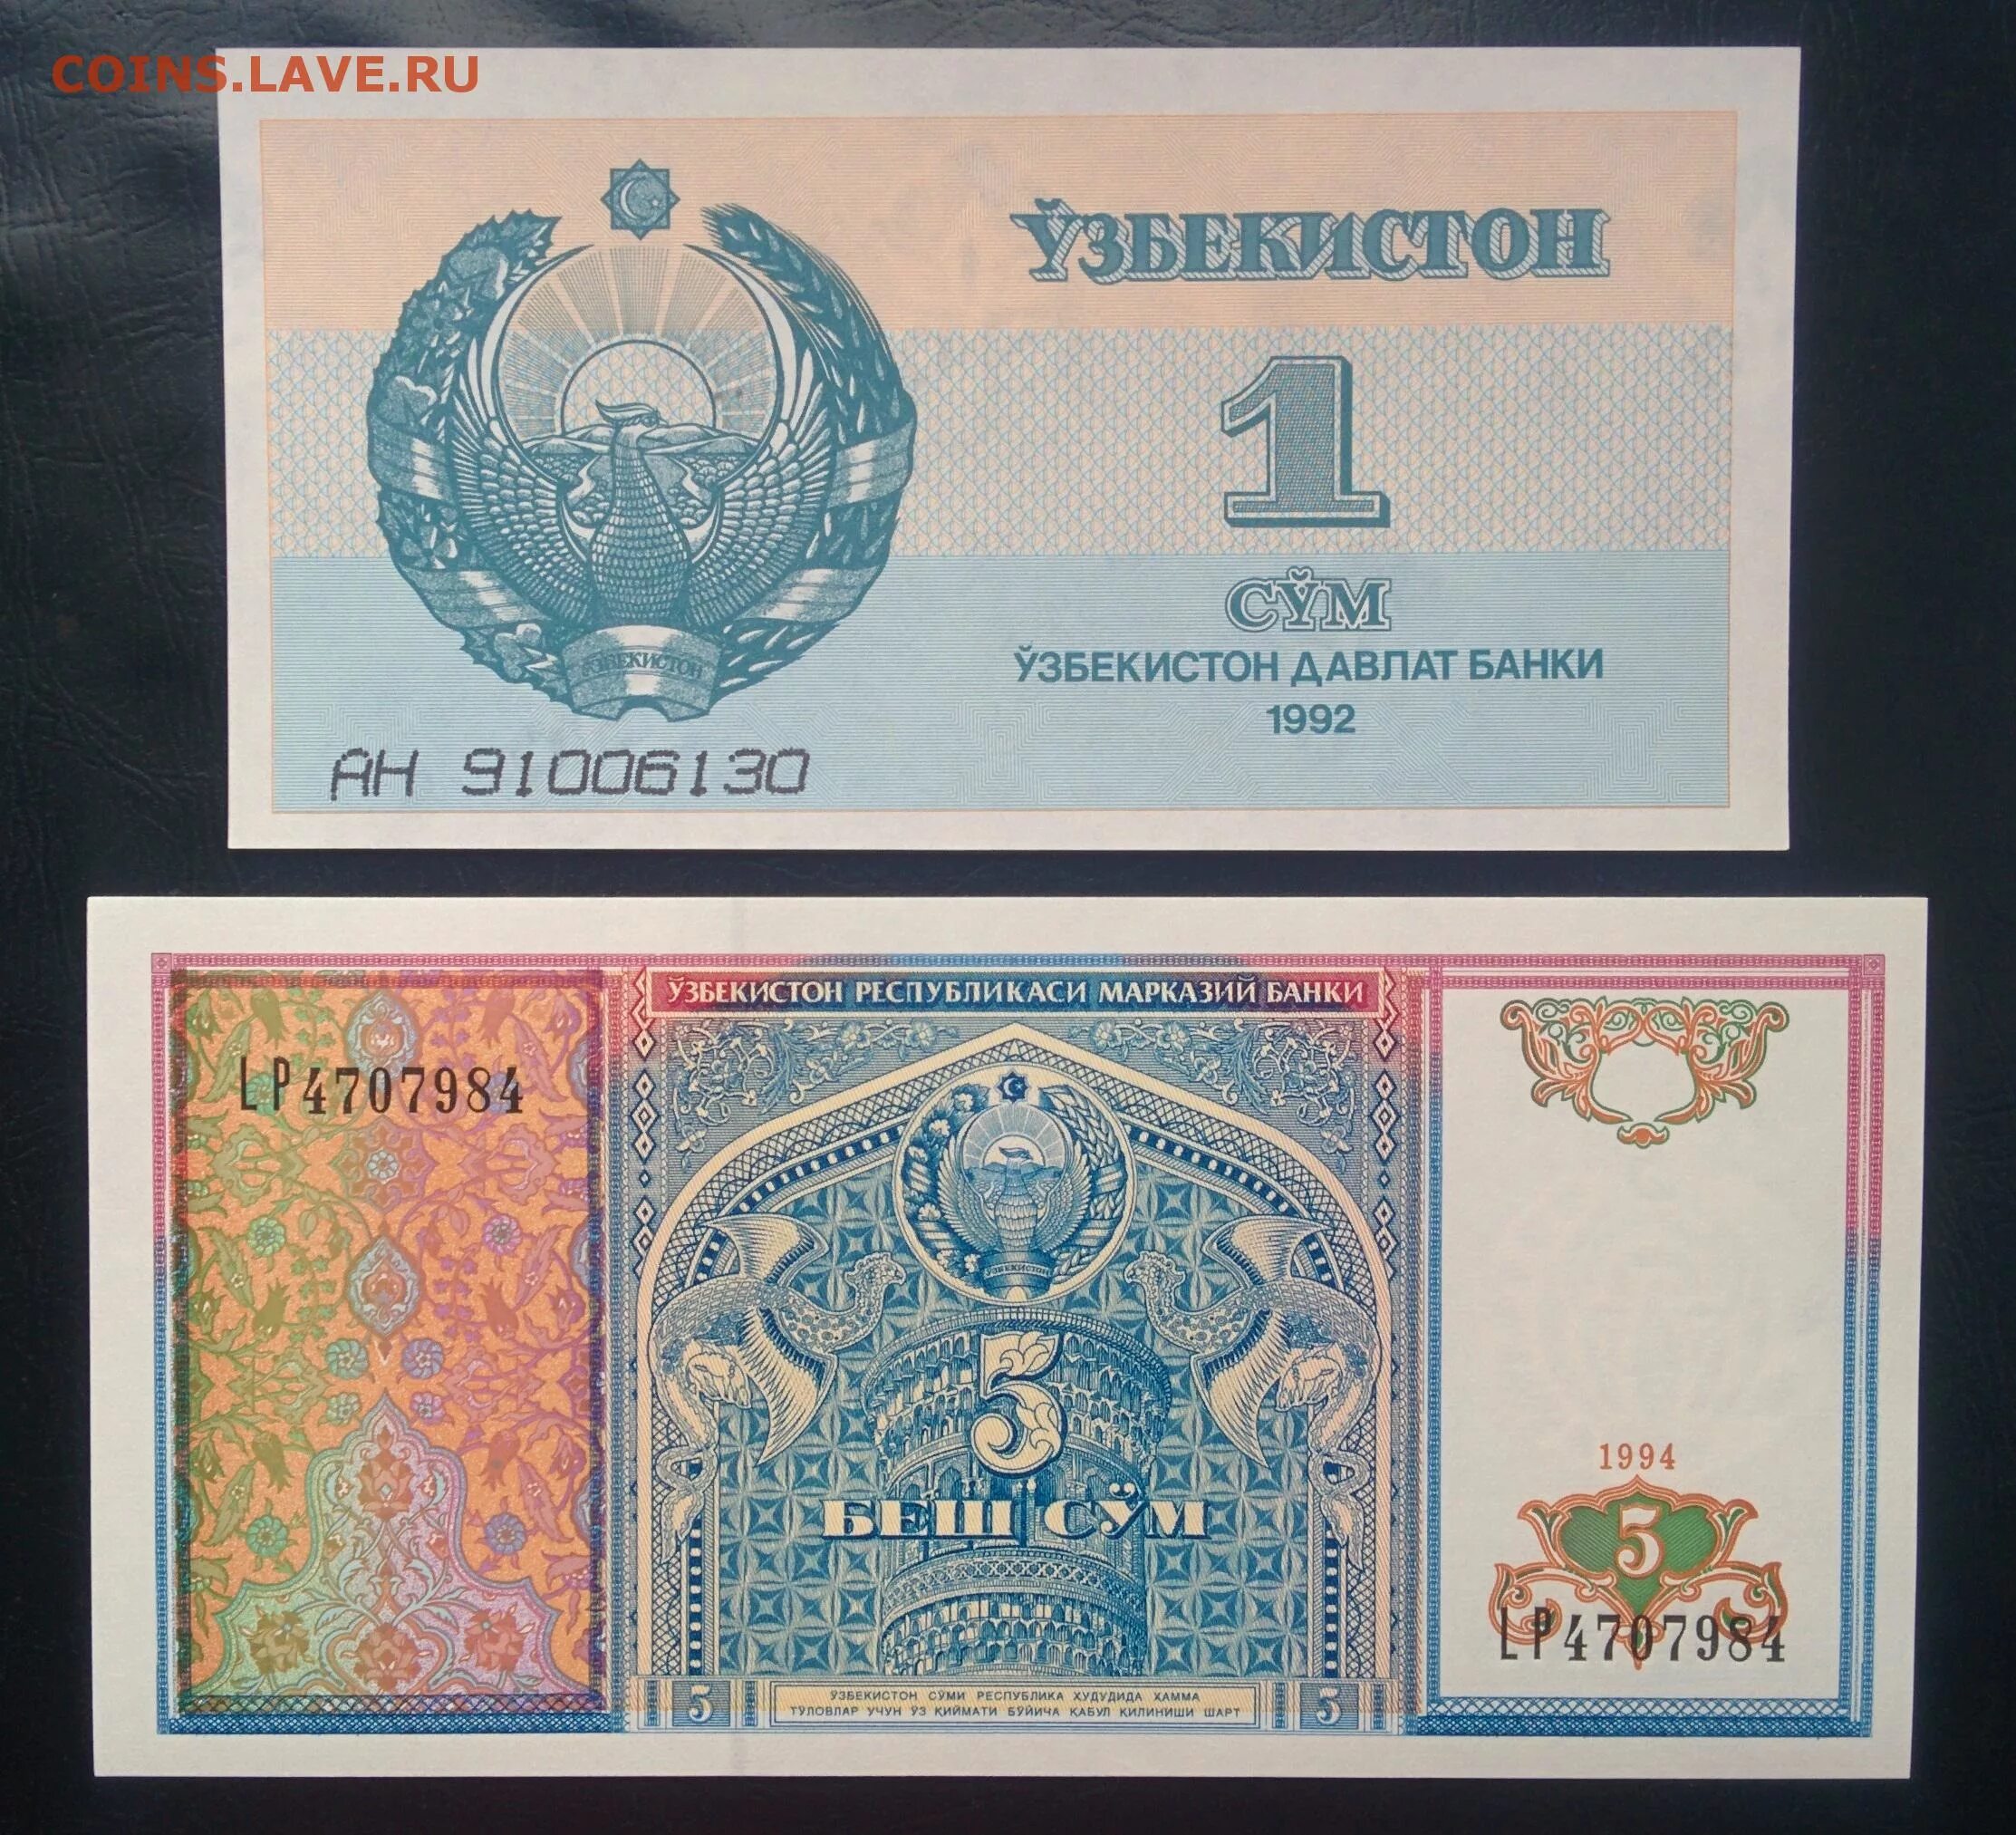 Узбекистан 1 сум 1994 г. UNC. Узбекский сум 1994 года. Узбекистанские 5 сум в рублях.